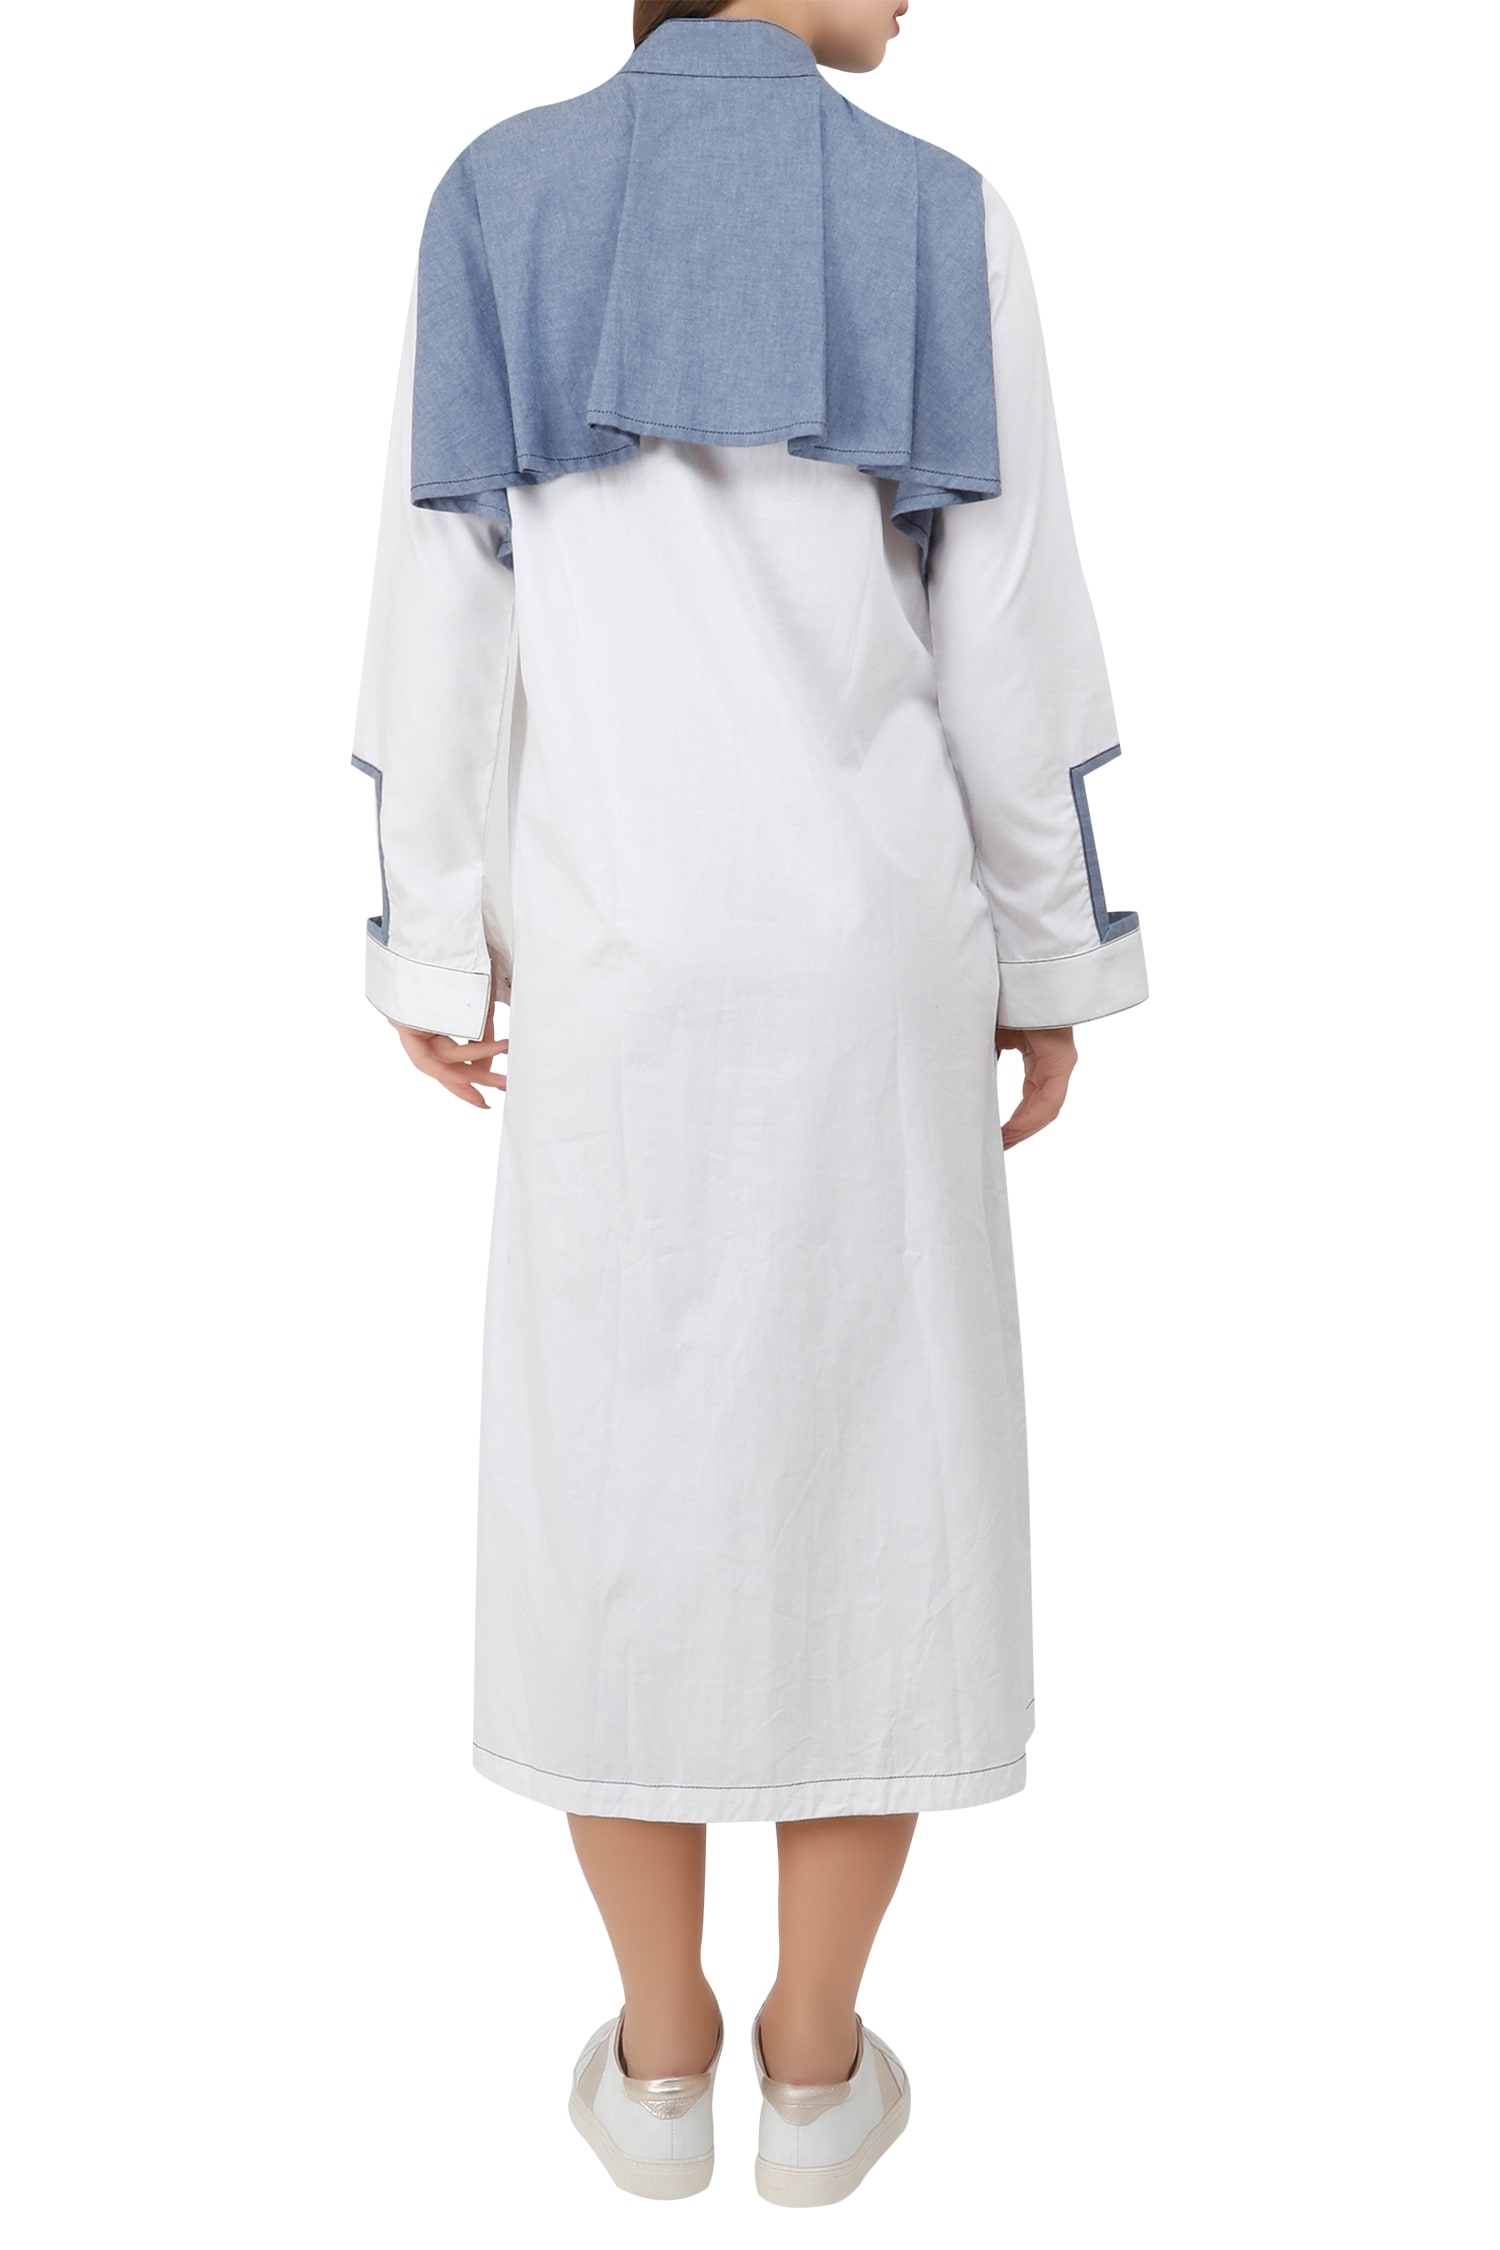 S & V Designs - Blue Poplin Embroidered Beads Mandarin High Low Shirt Dress  For Women